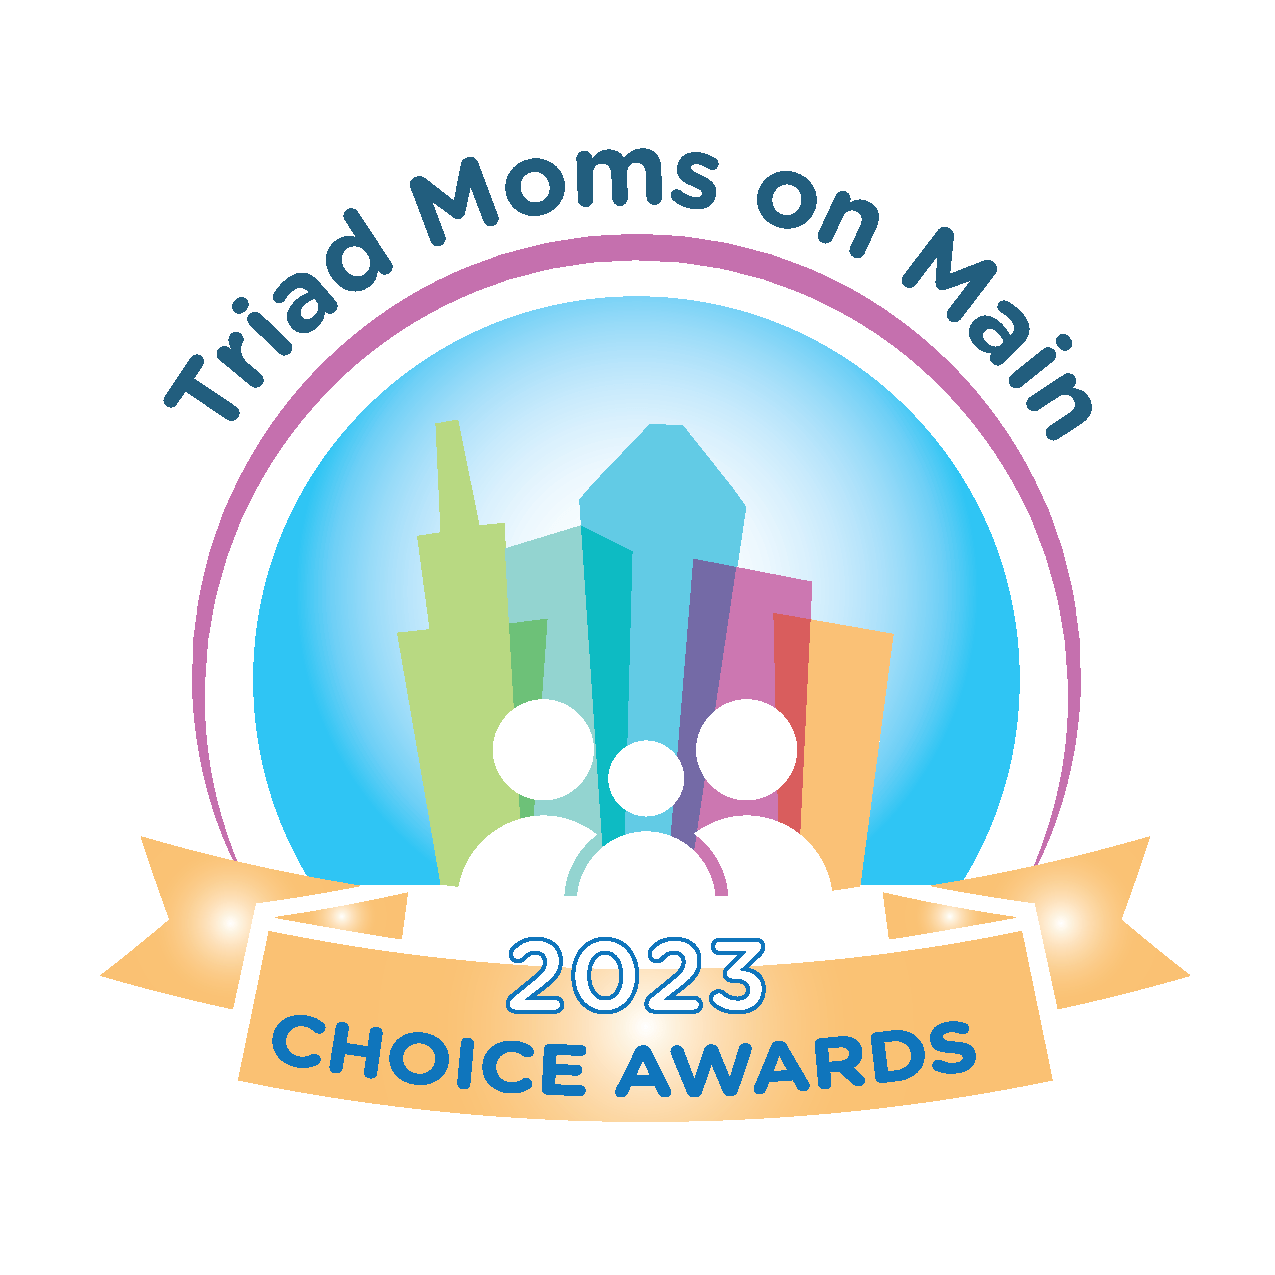 choice awards logo